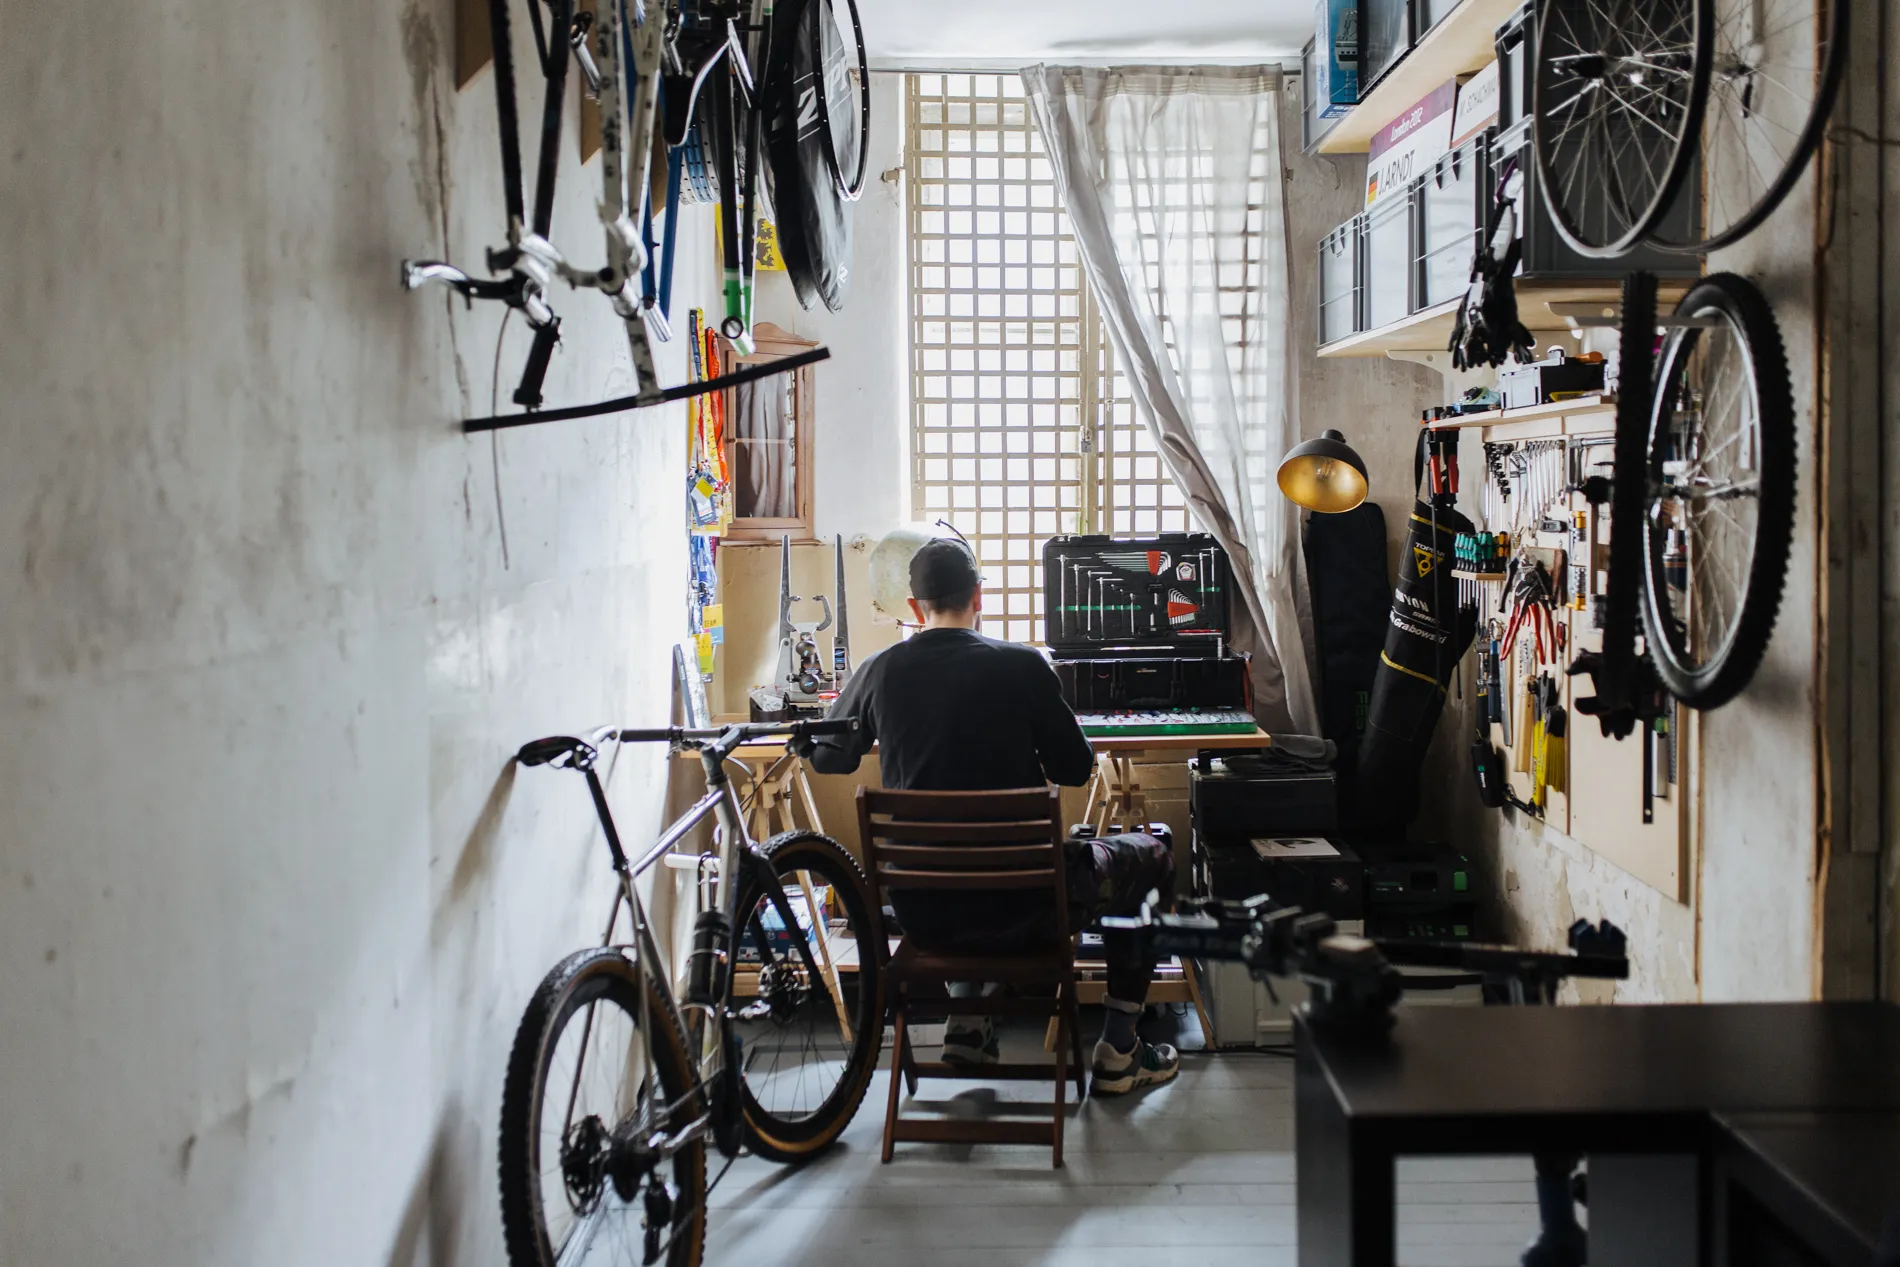  Life As a Touring Bike Mechanic: Oliver Grabowski